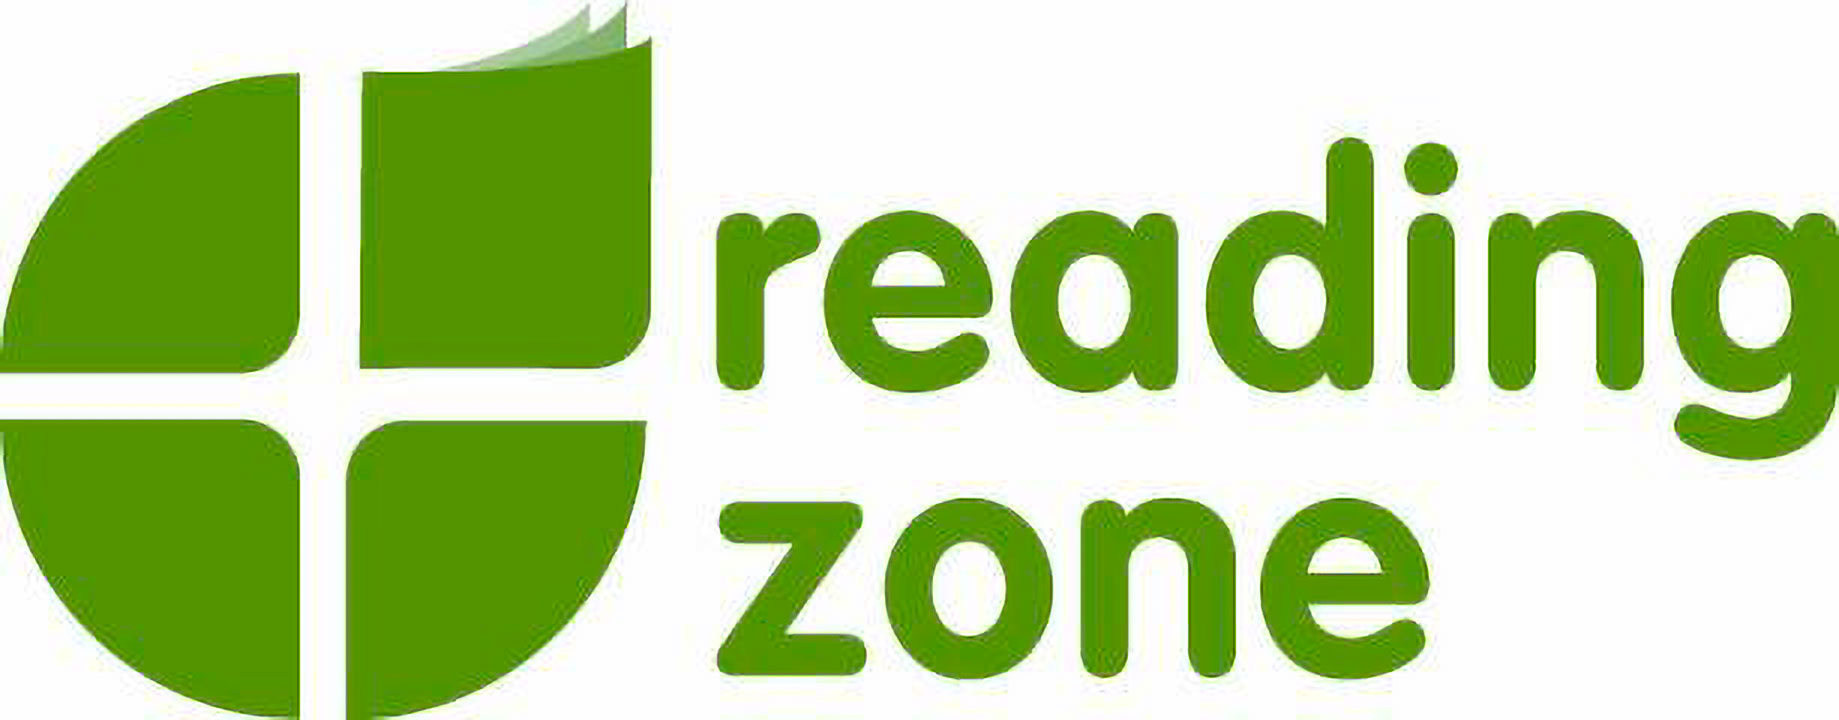 Reading Zone and School Zone logo